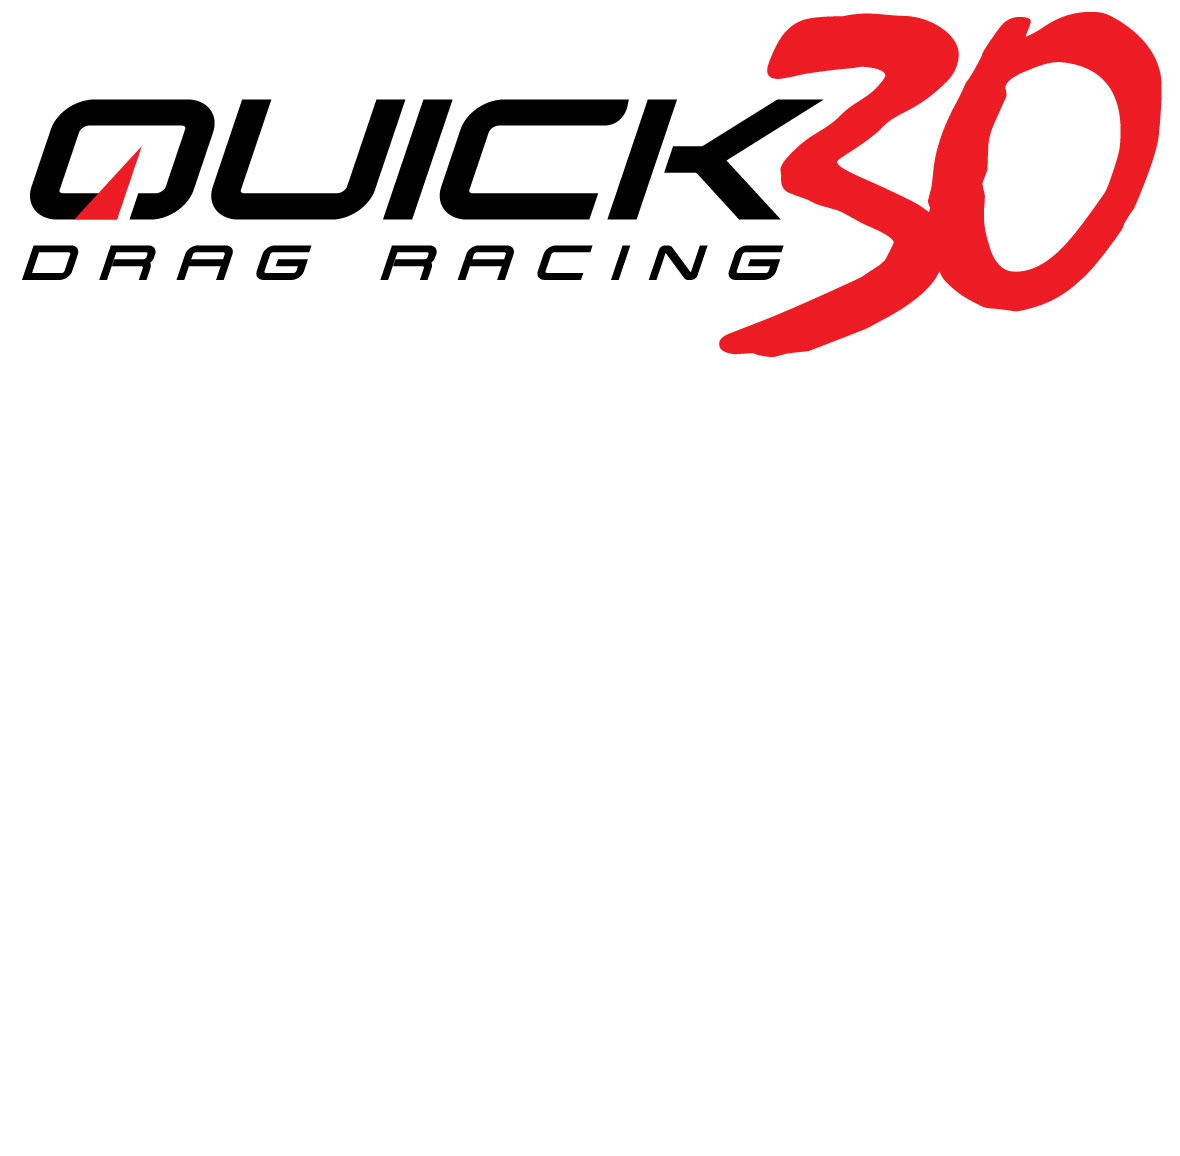 Branding_Quick_30_Large